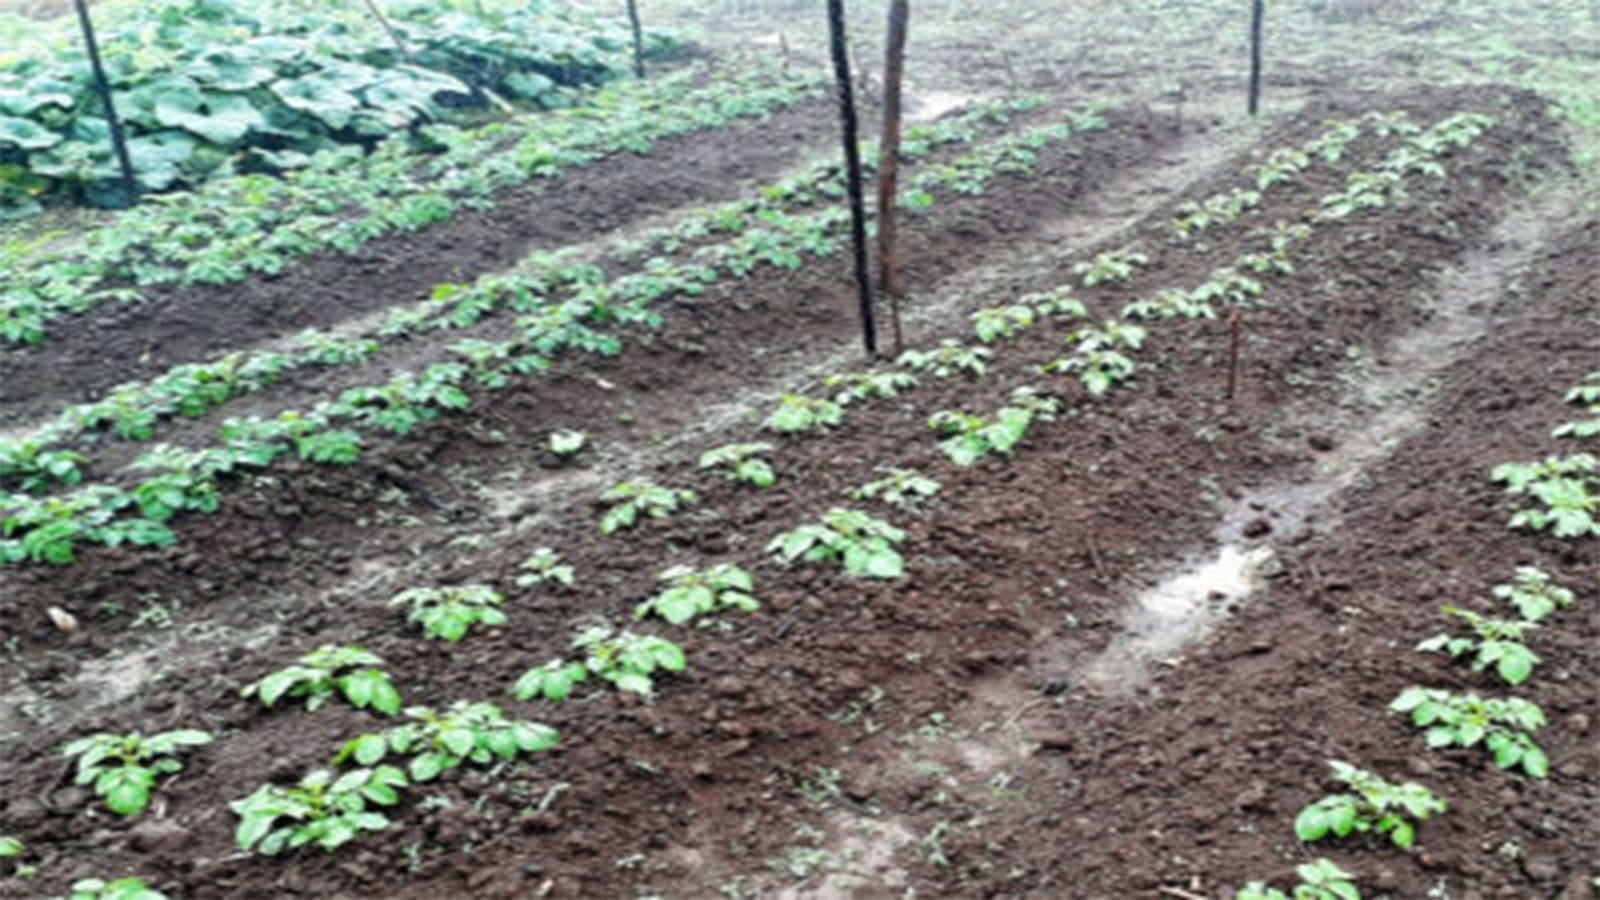 Lachlan Kenya develops eco-friendly seed treatment technology